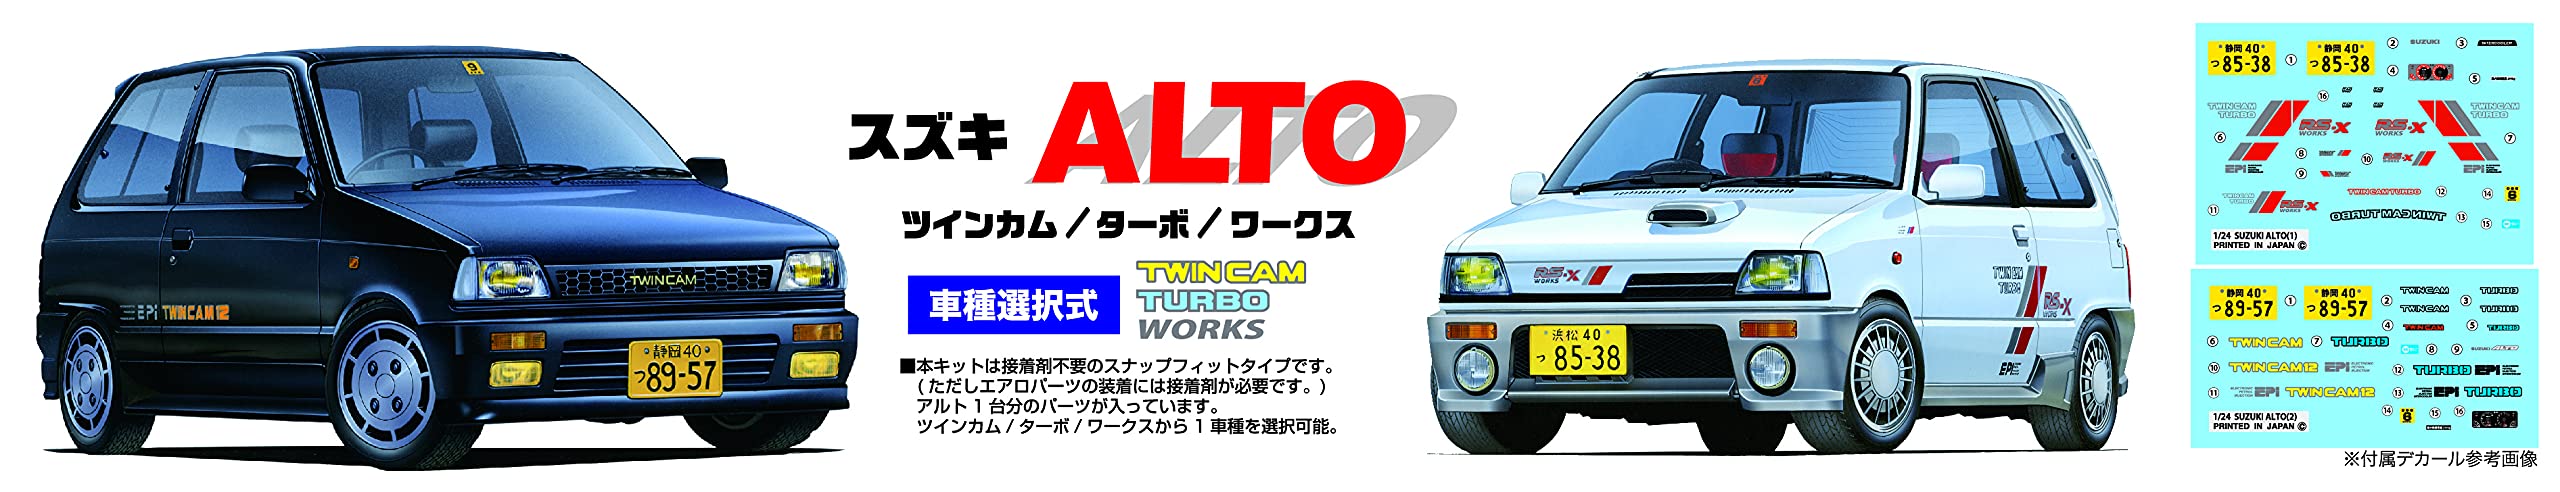 FUJIMI Inch Up 1/24 Suzuki Alto Twincam / Turbo / Works Plastic Model